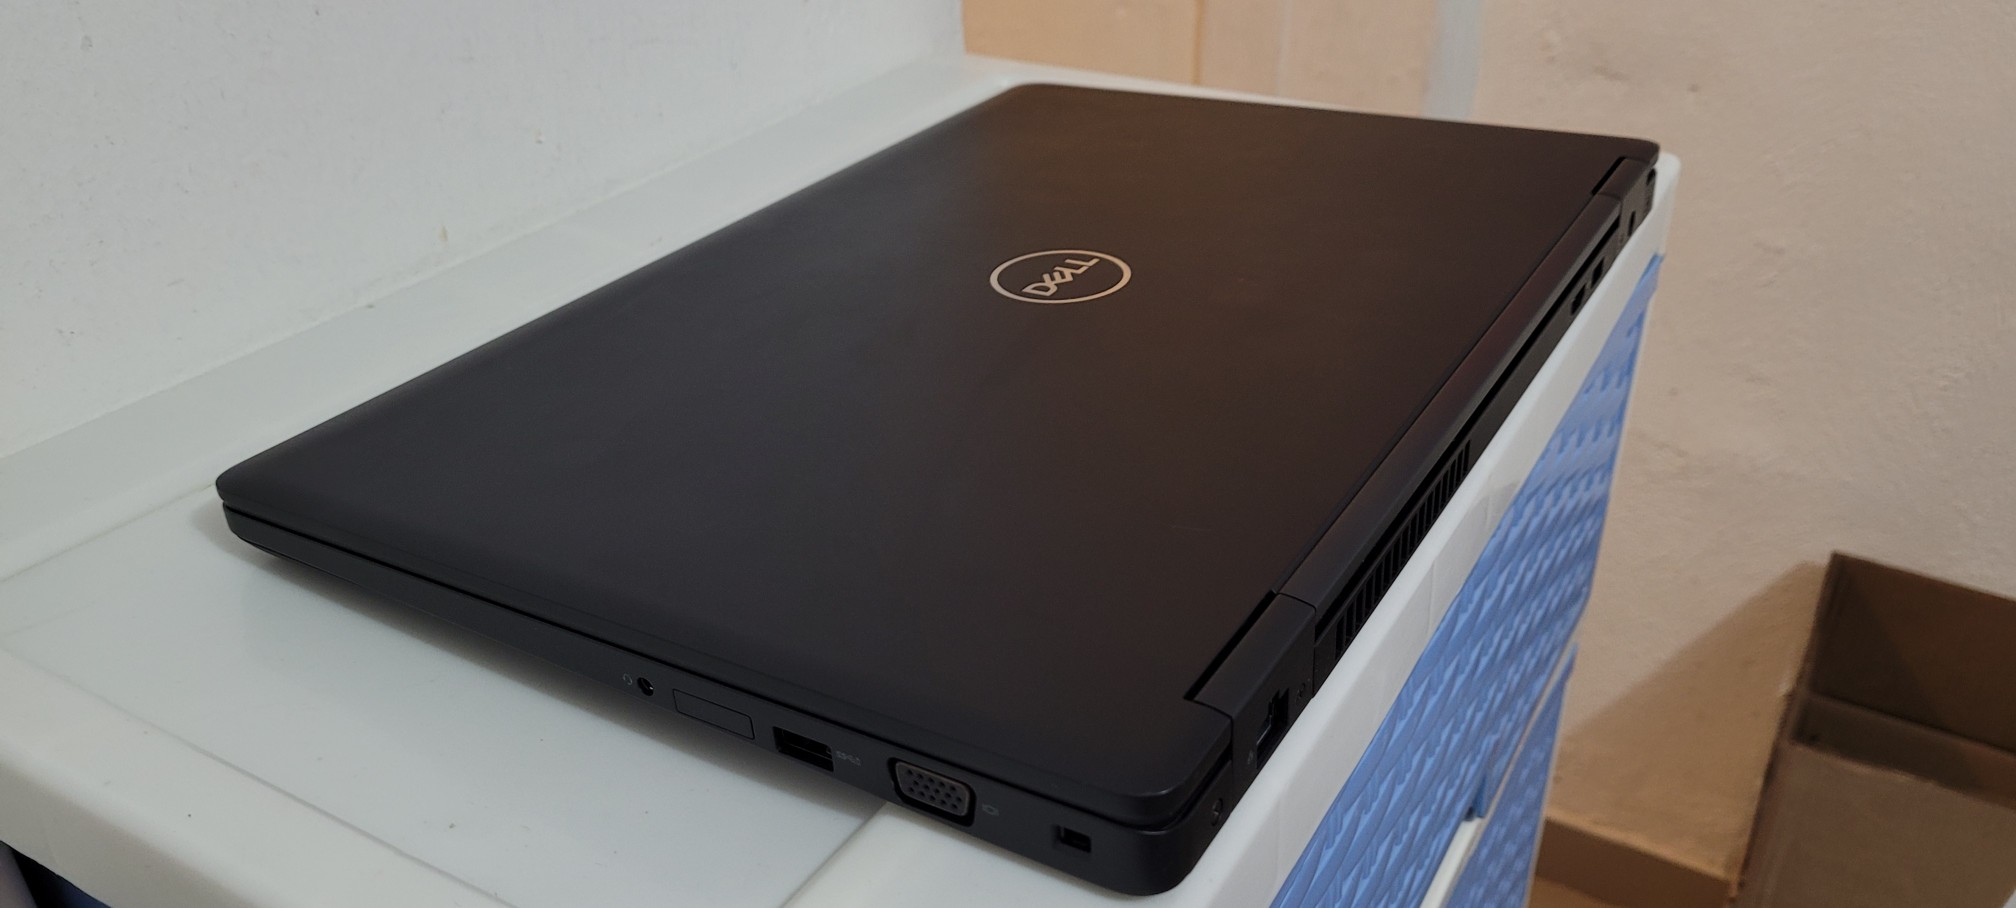 computadoras y laptops - Dell 5590 17 Pulg Core i5 8va Gen Ram 16gb ddr4 Disco 500gb SSD Video 8gb 2